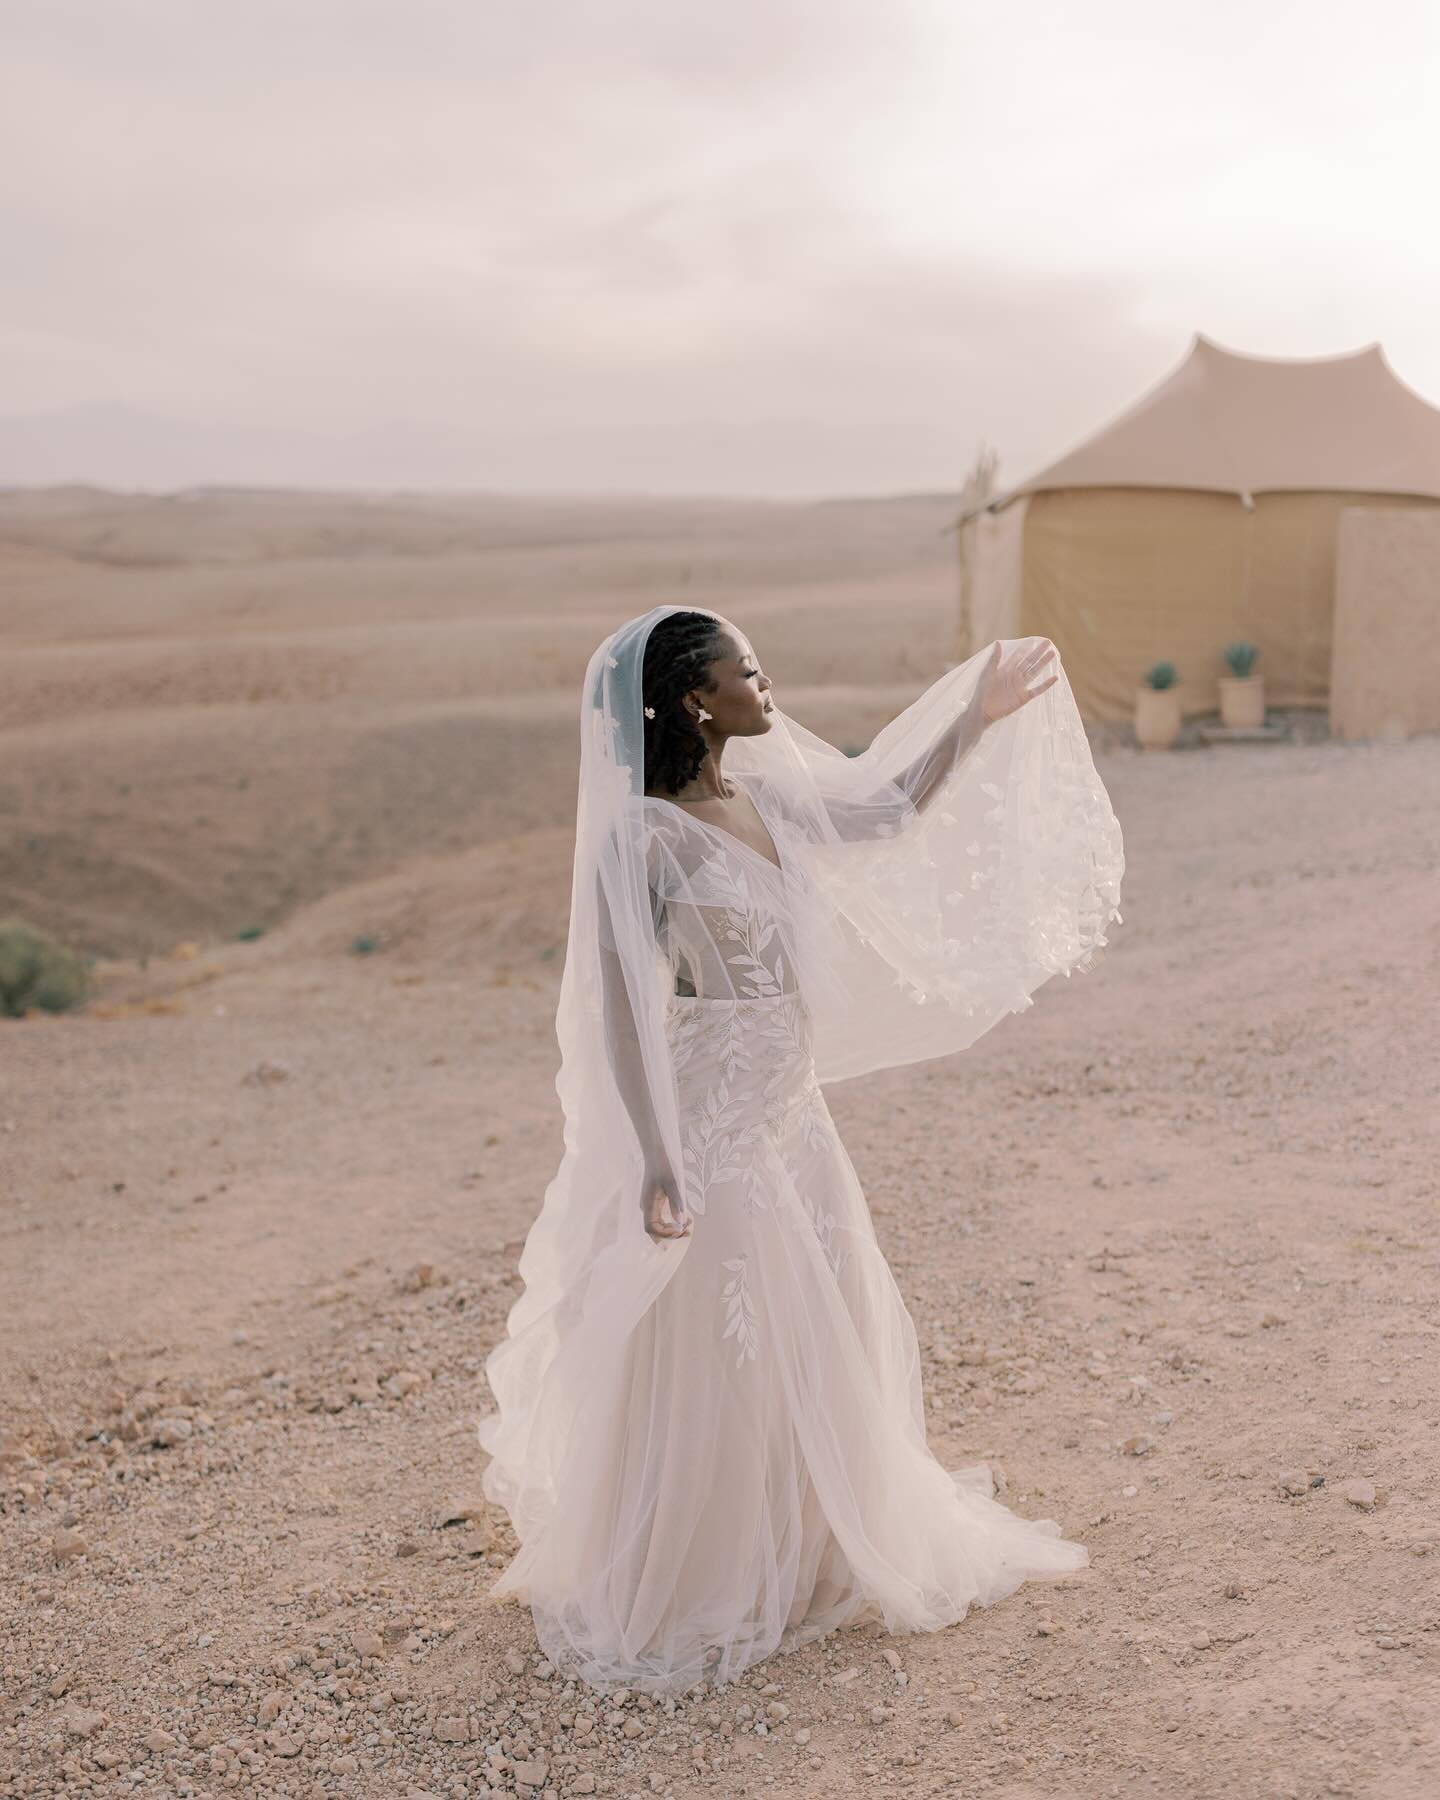 Just for today, simply feel, be present... #agafay #agafaydesert #agafayluxurycamp #marrakech🇲🇦 #marrakechwedding #marrakechweddingphotographer #morocco #voguewedding #destinationwedding #desert #feelings #lookslikefilm #junebug #weddings #desertwe